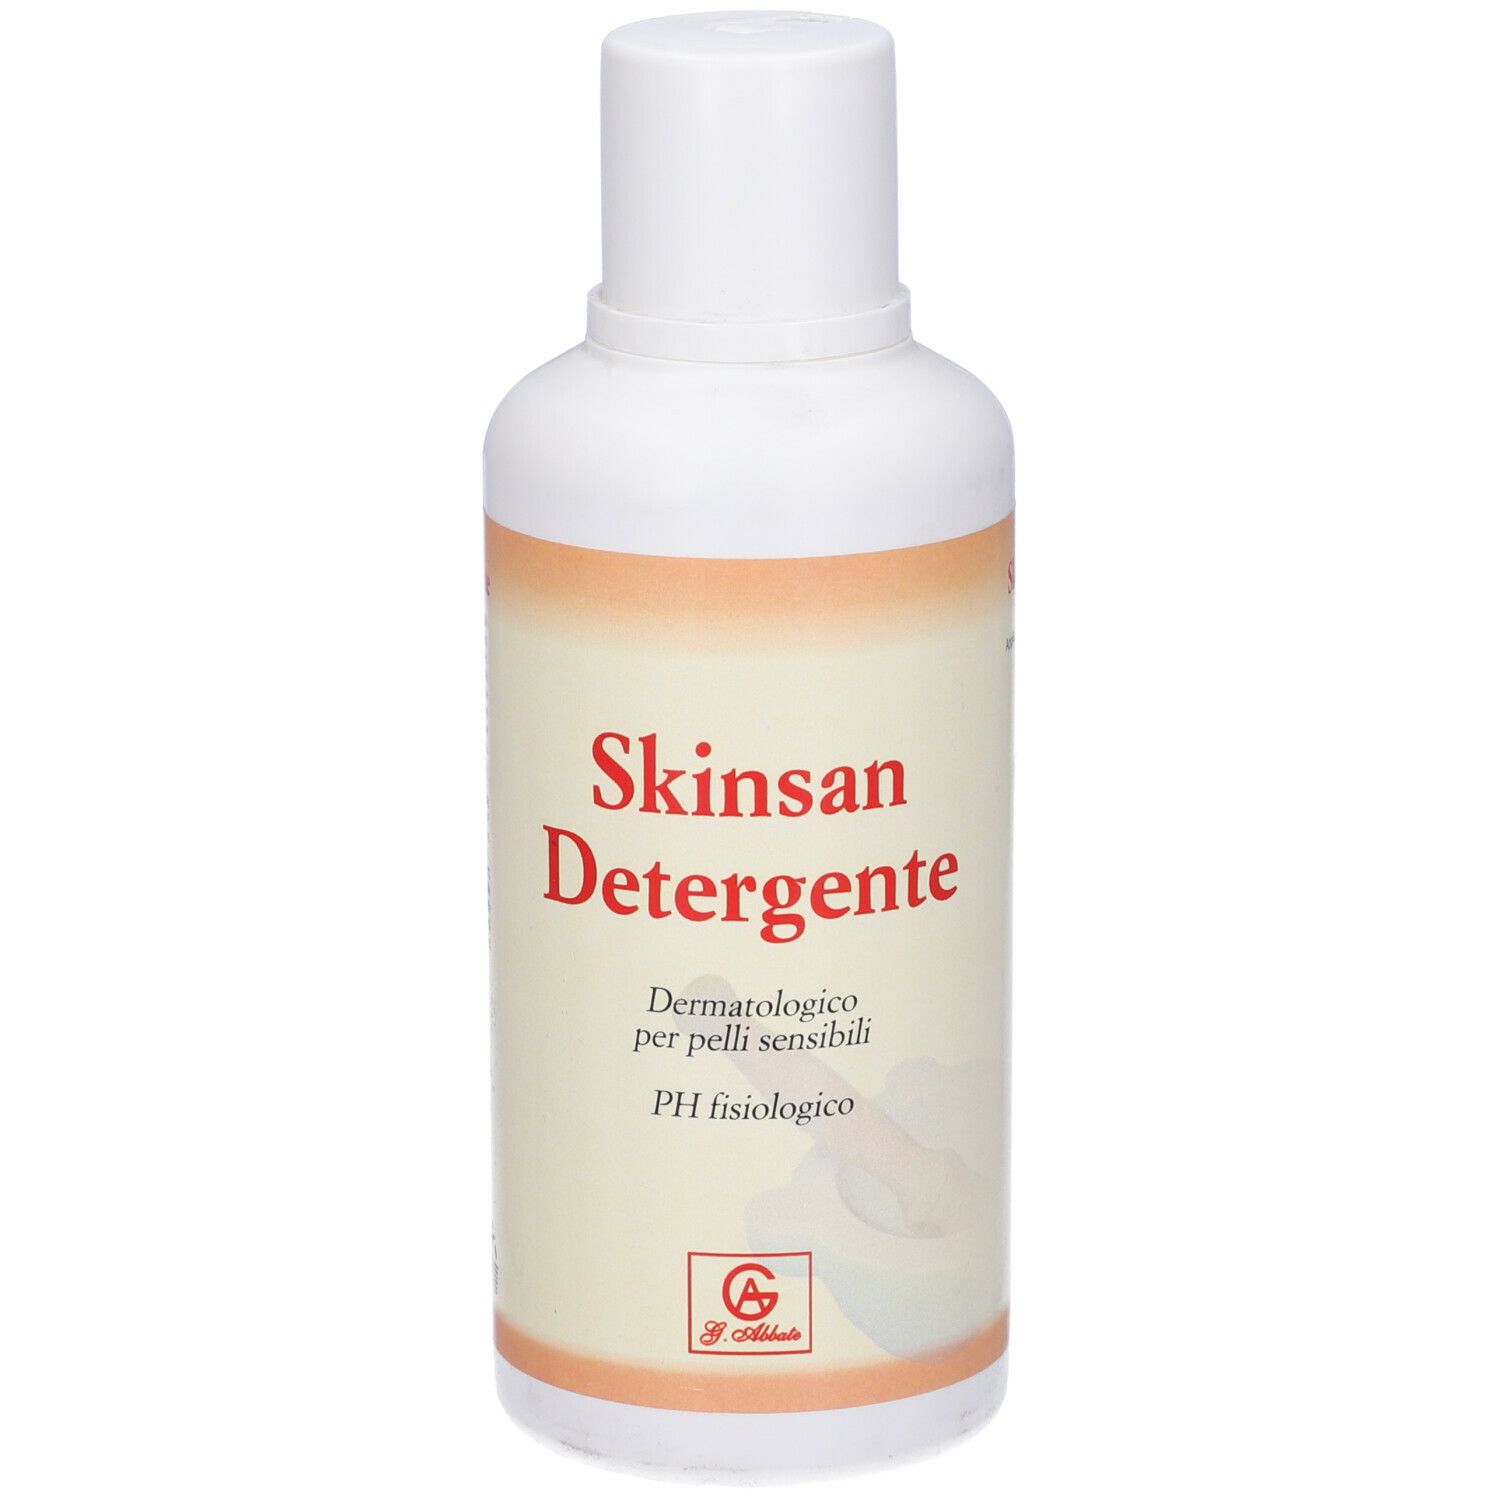 Image of Skinsan Detergente G.Abbate 500ml